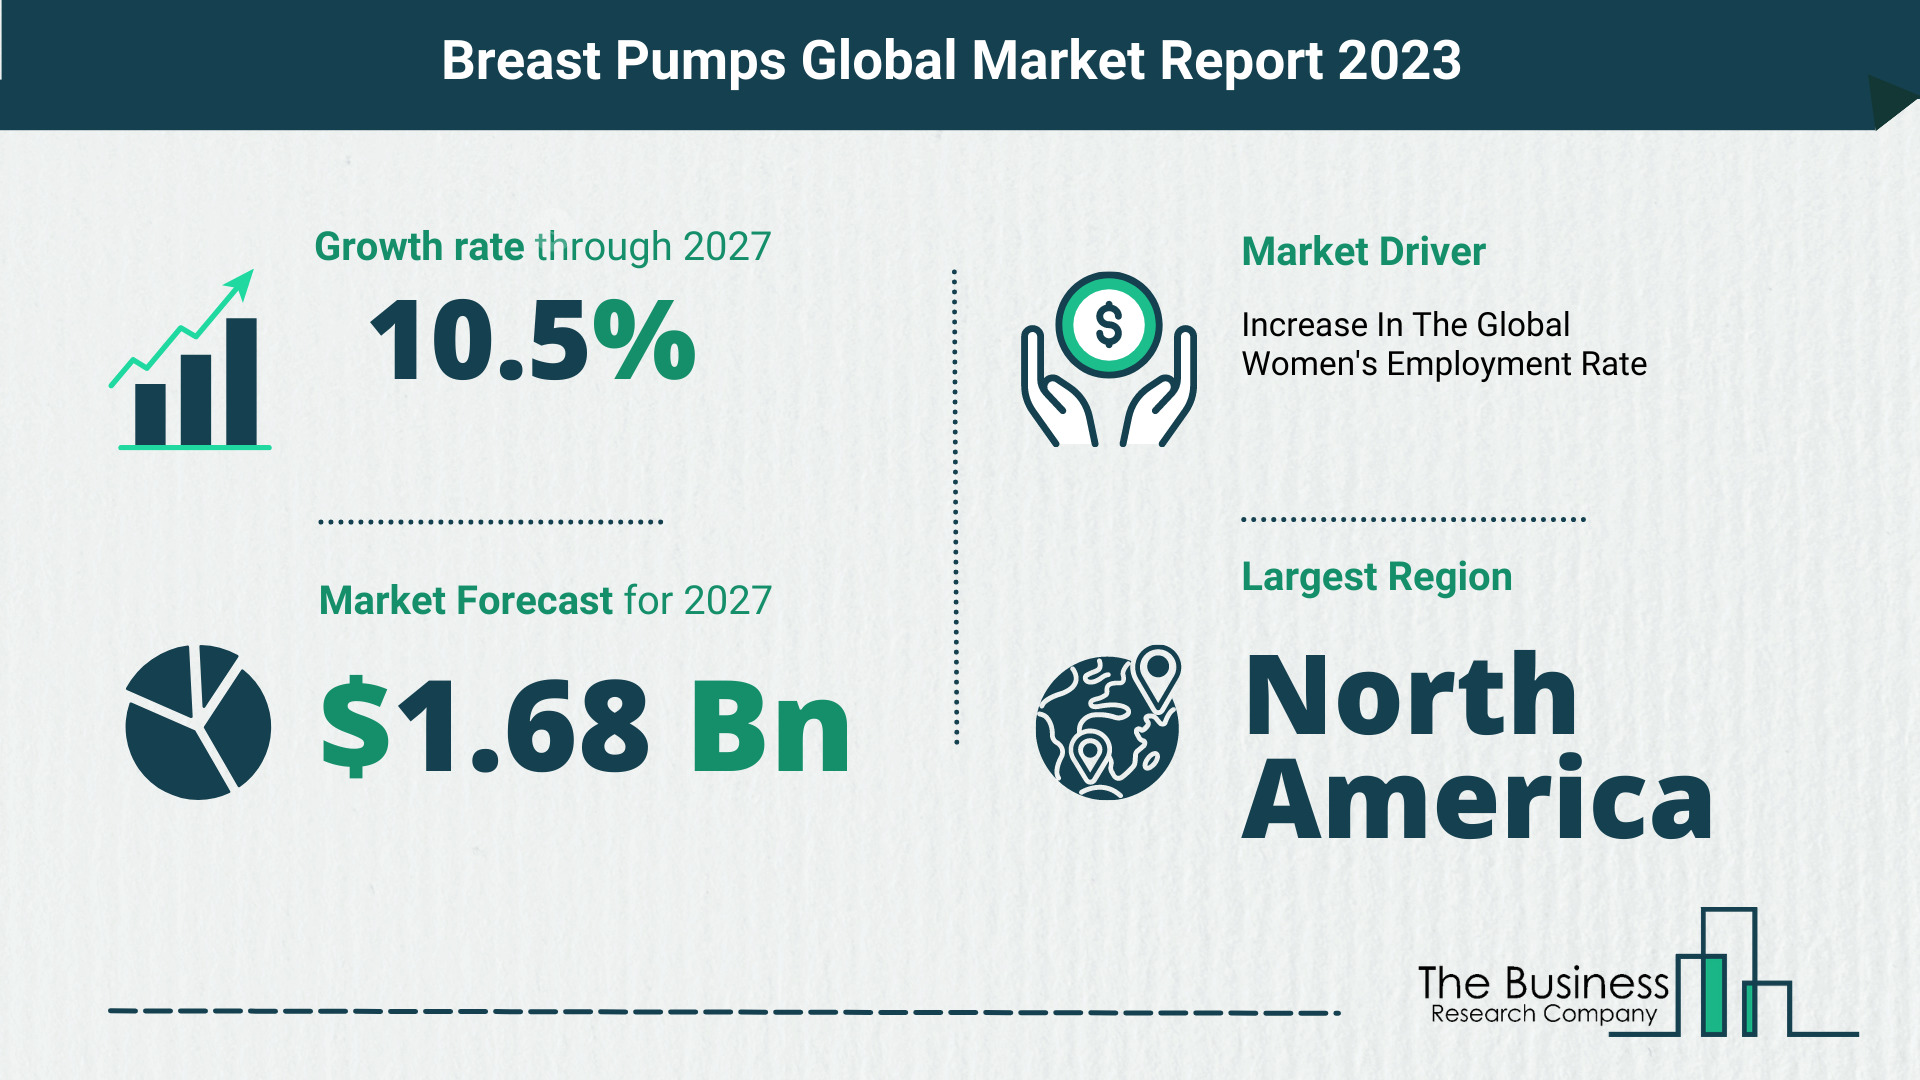 Global Breast Pumps Market